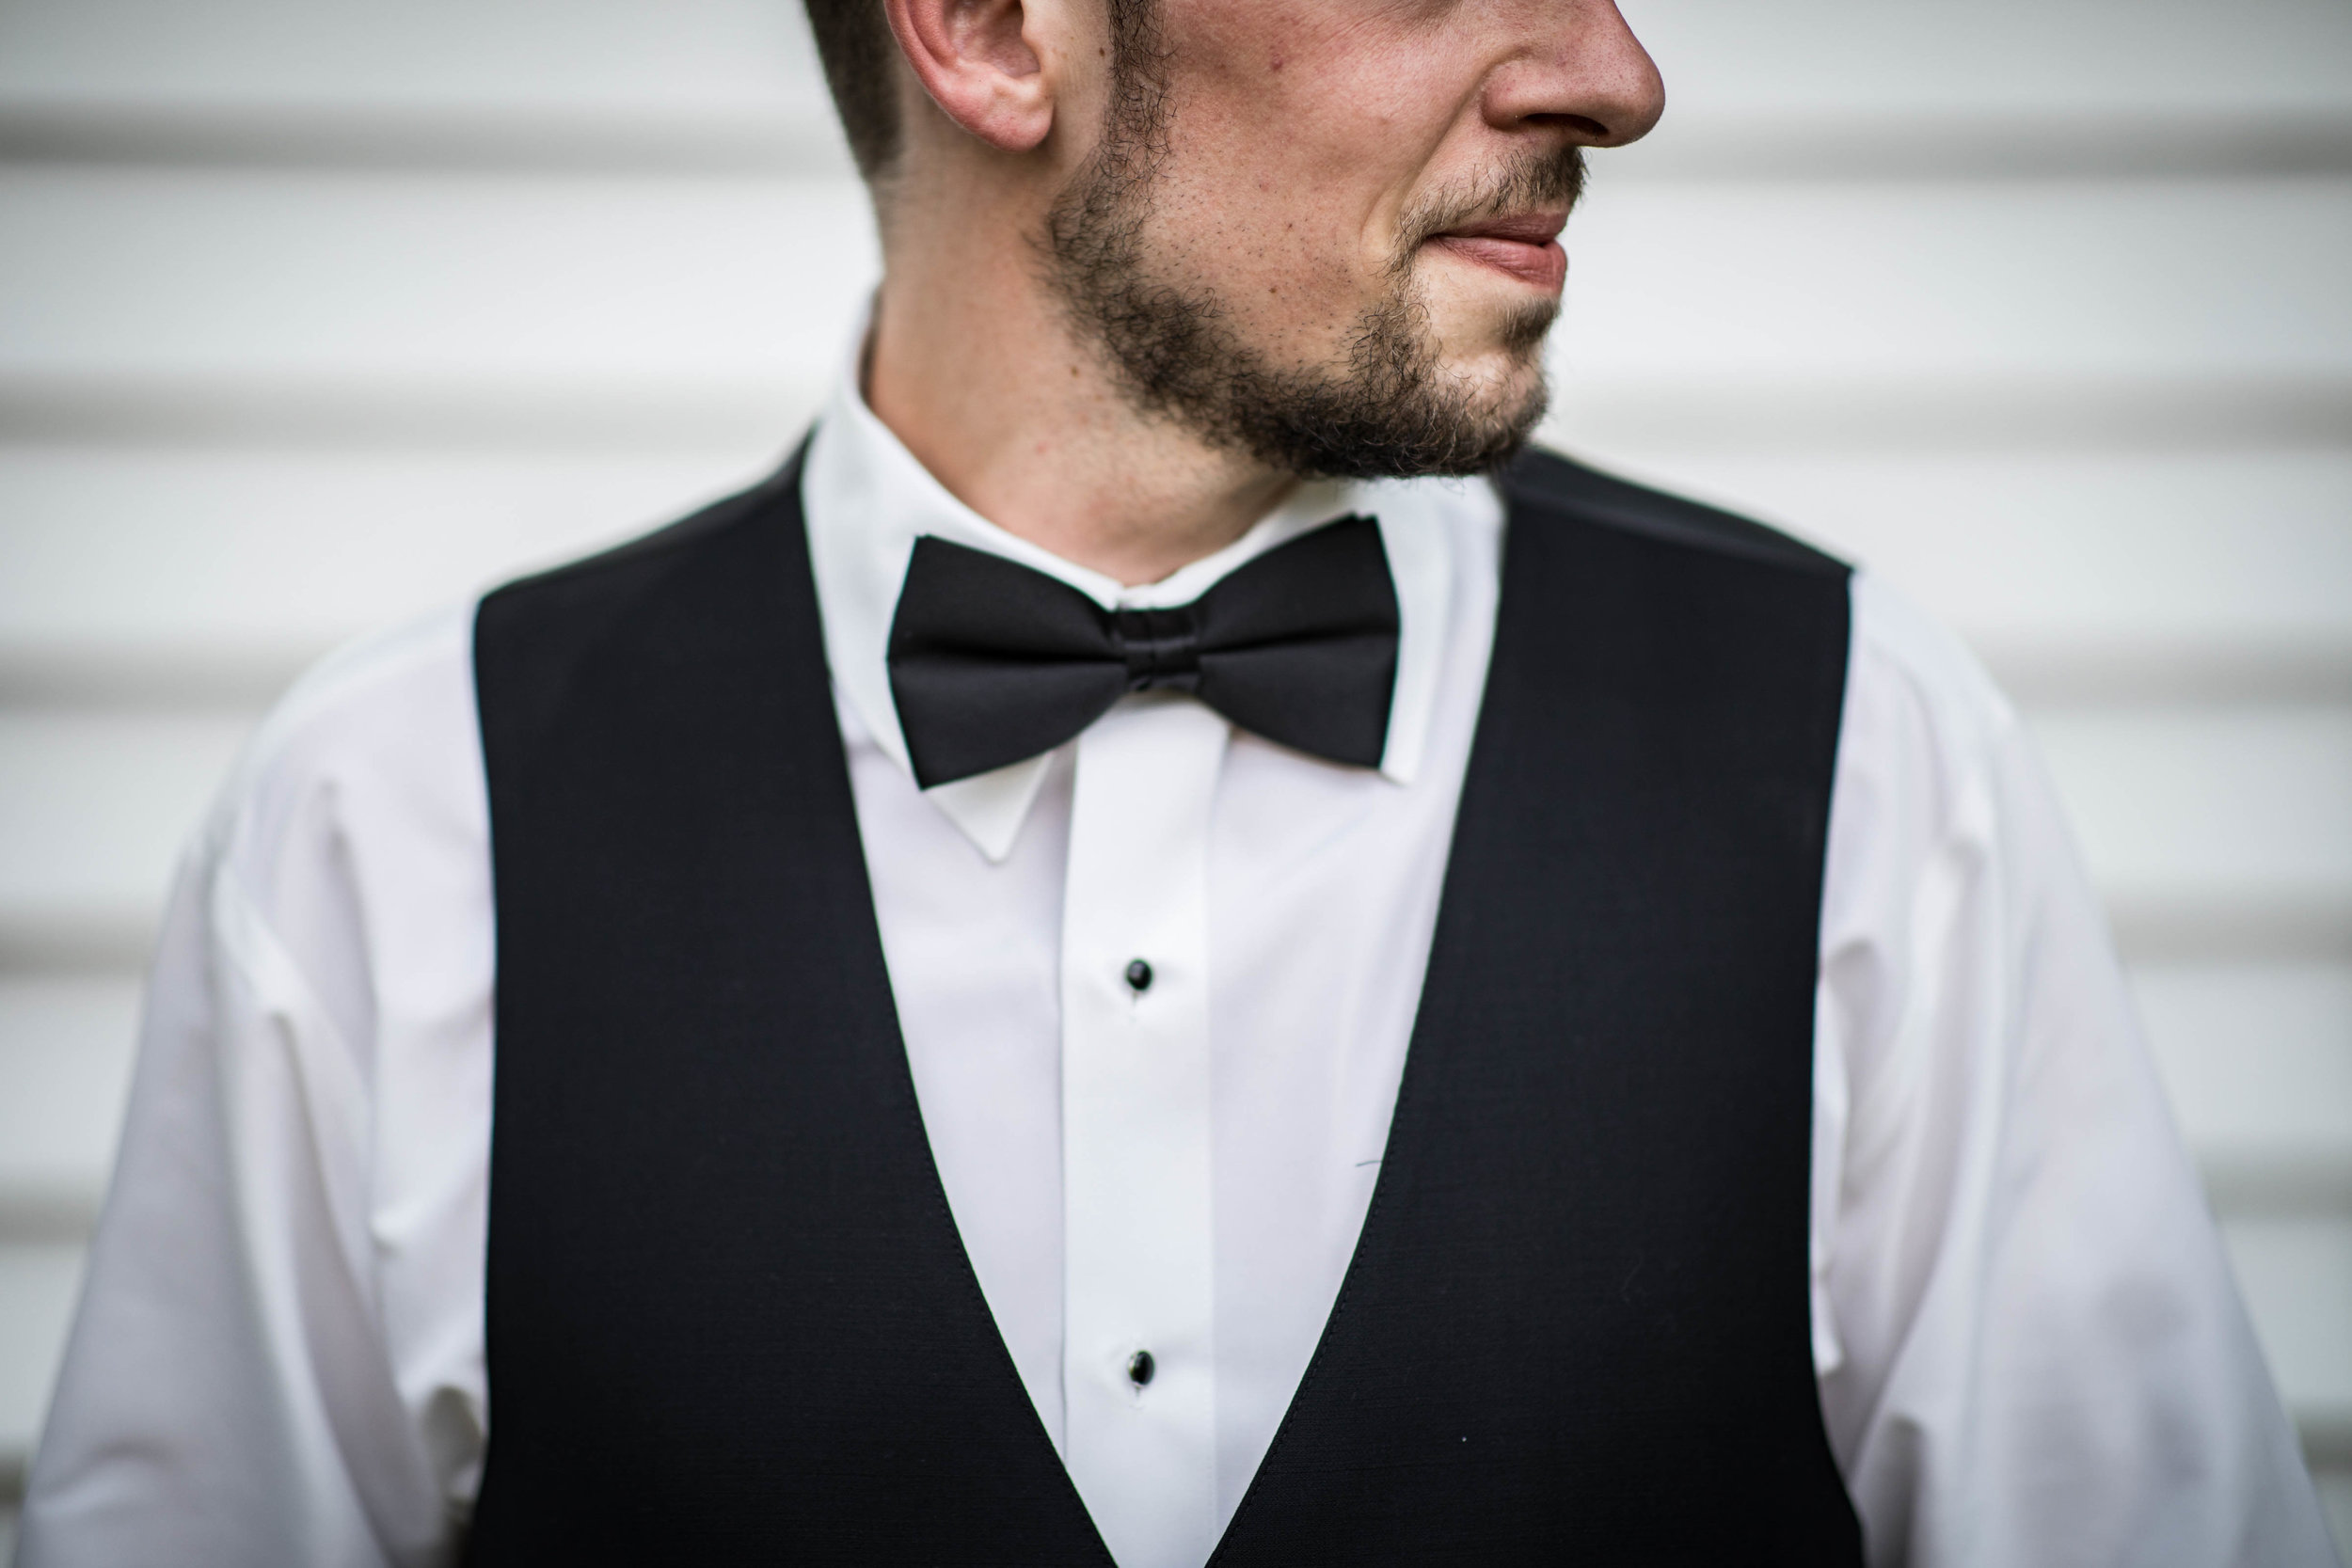  profile bowtie photo of the groom 